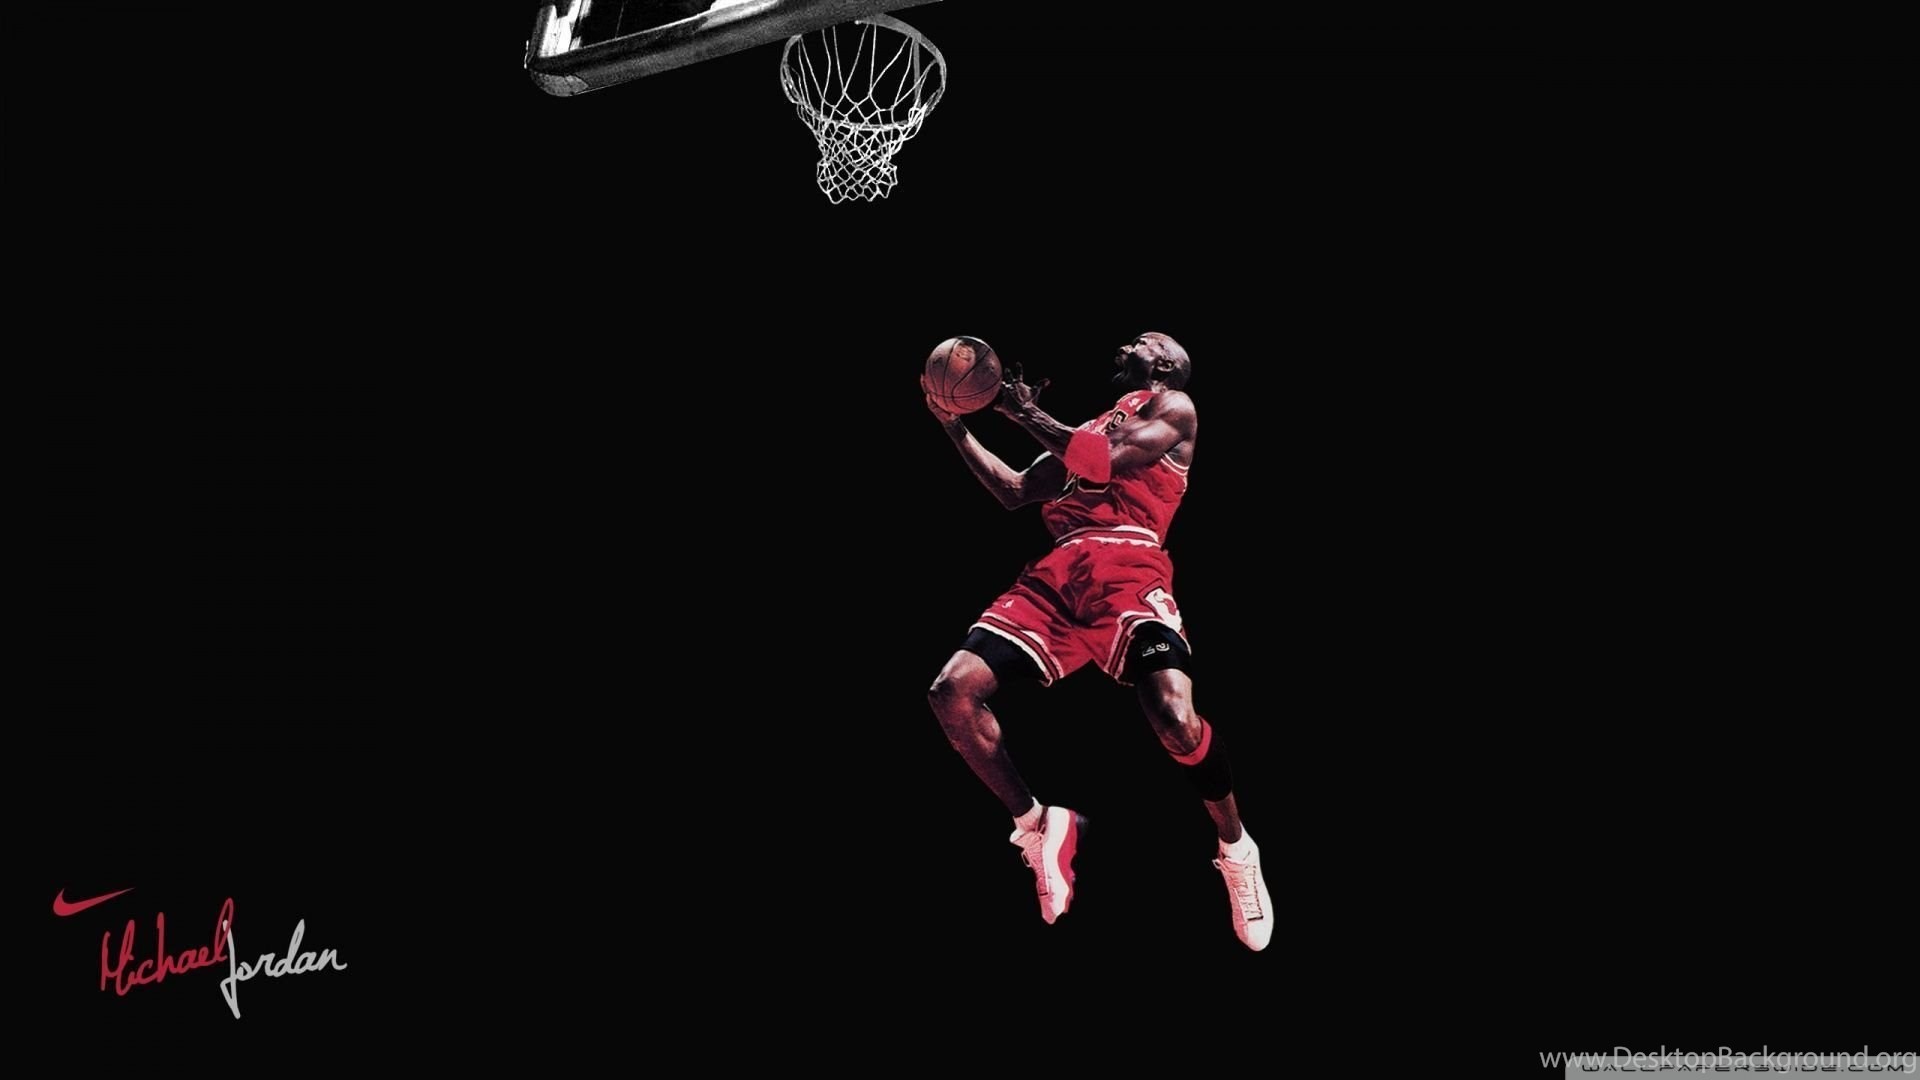 1920x1080 ... Michael Jordan Wallpapers HD Download Free Desktop Background